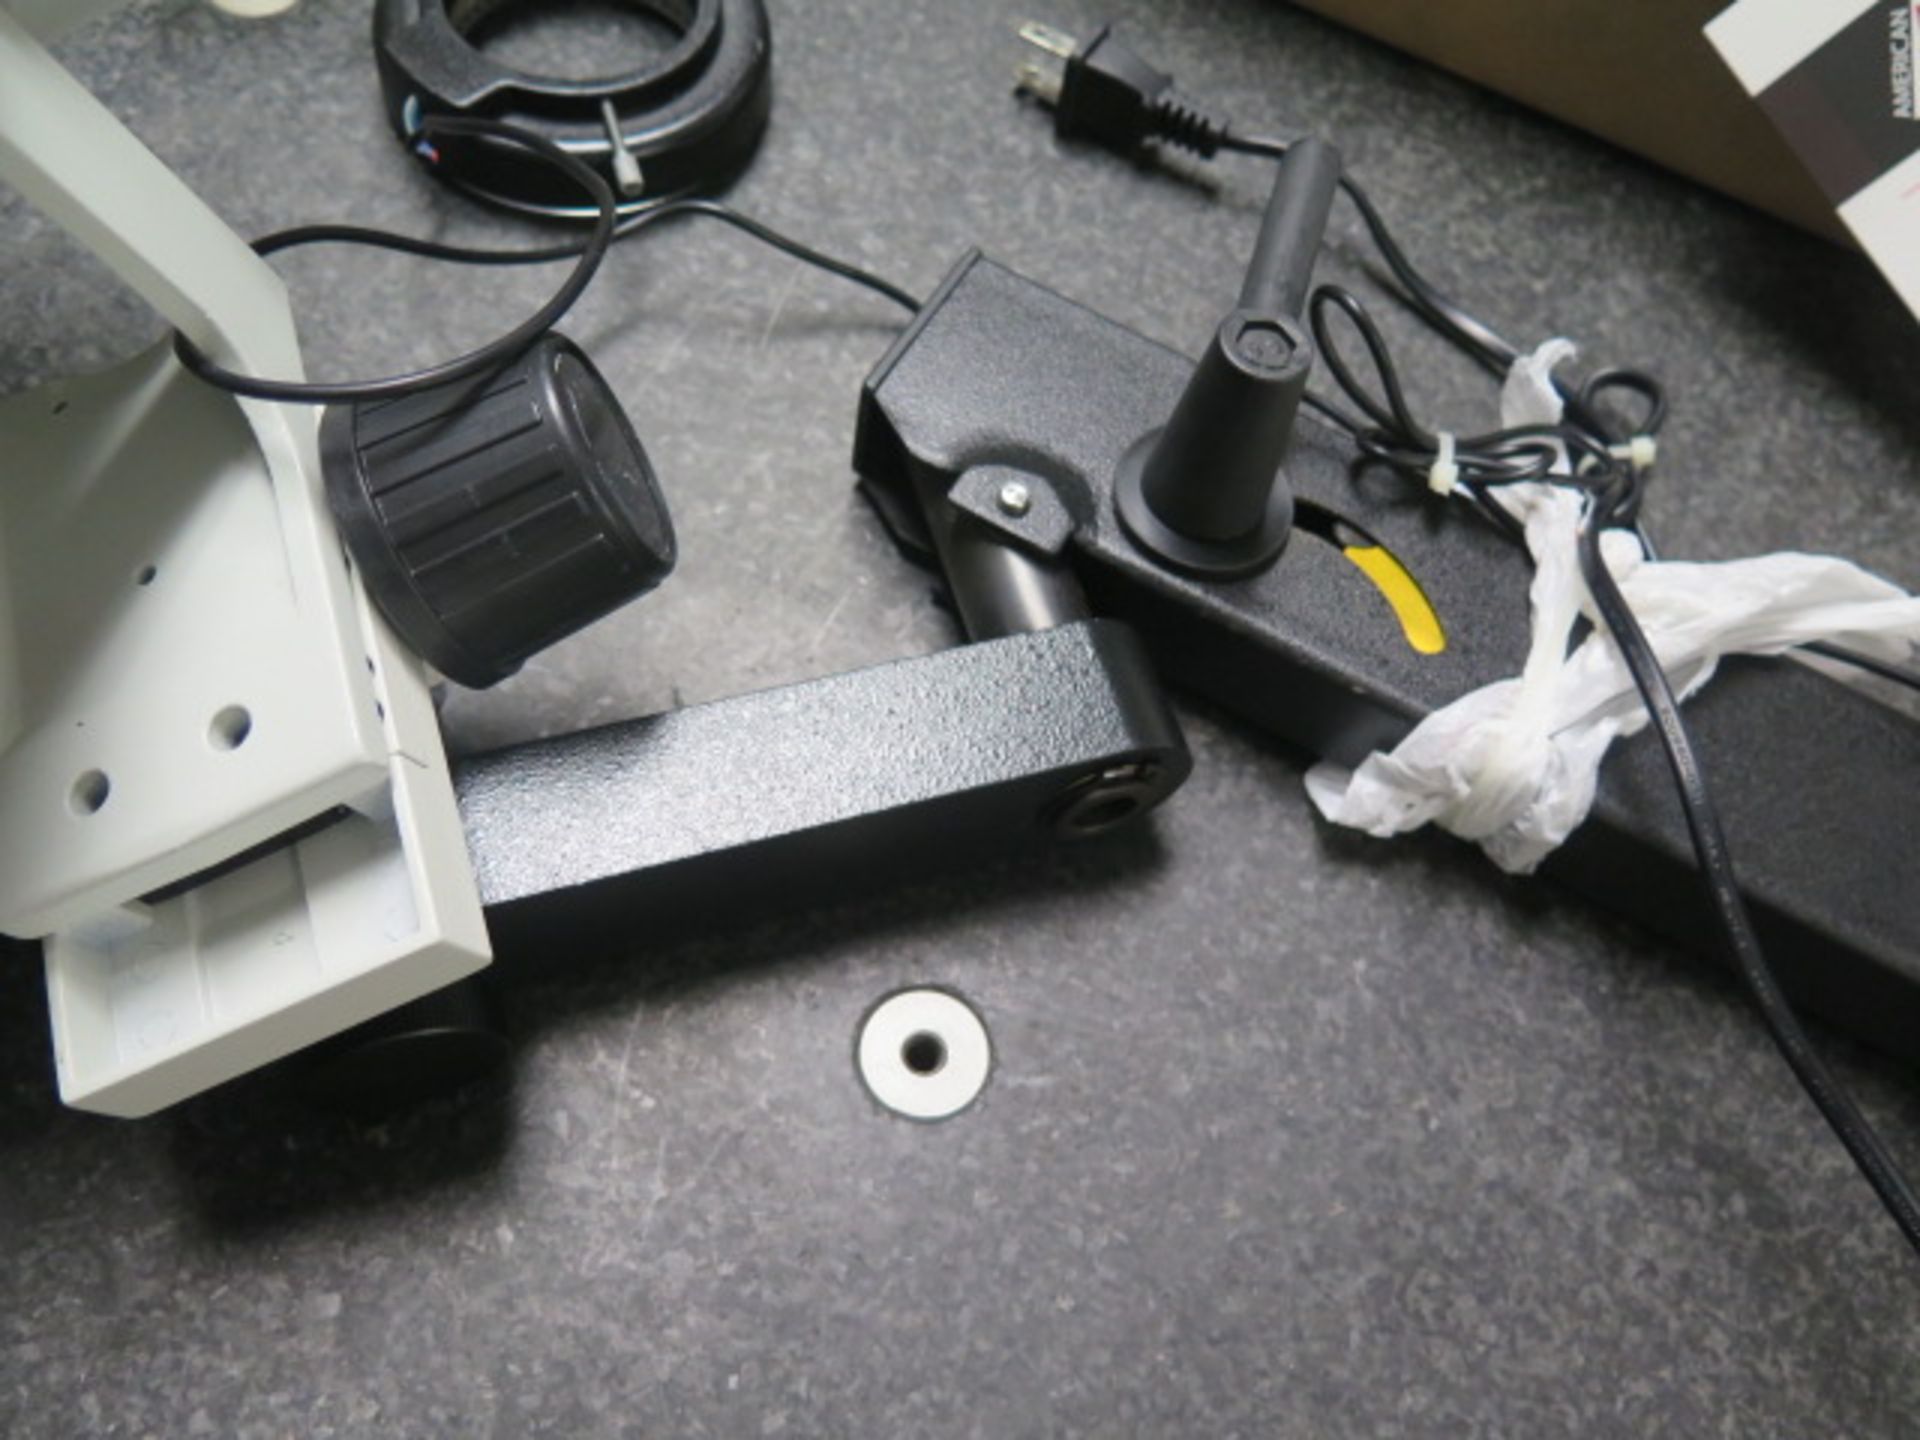 Nikon SMZ-745 Stereo Microscope w/ Light Source (NO MOUNTING BRACKET) (SOLD AS-IS - NO WARRANTY) - Image 9 of 9